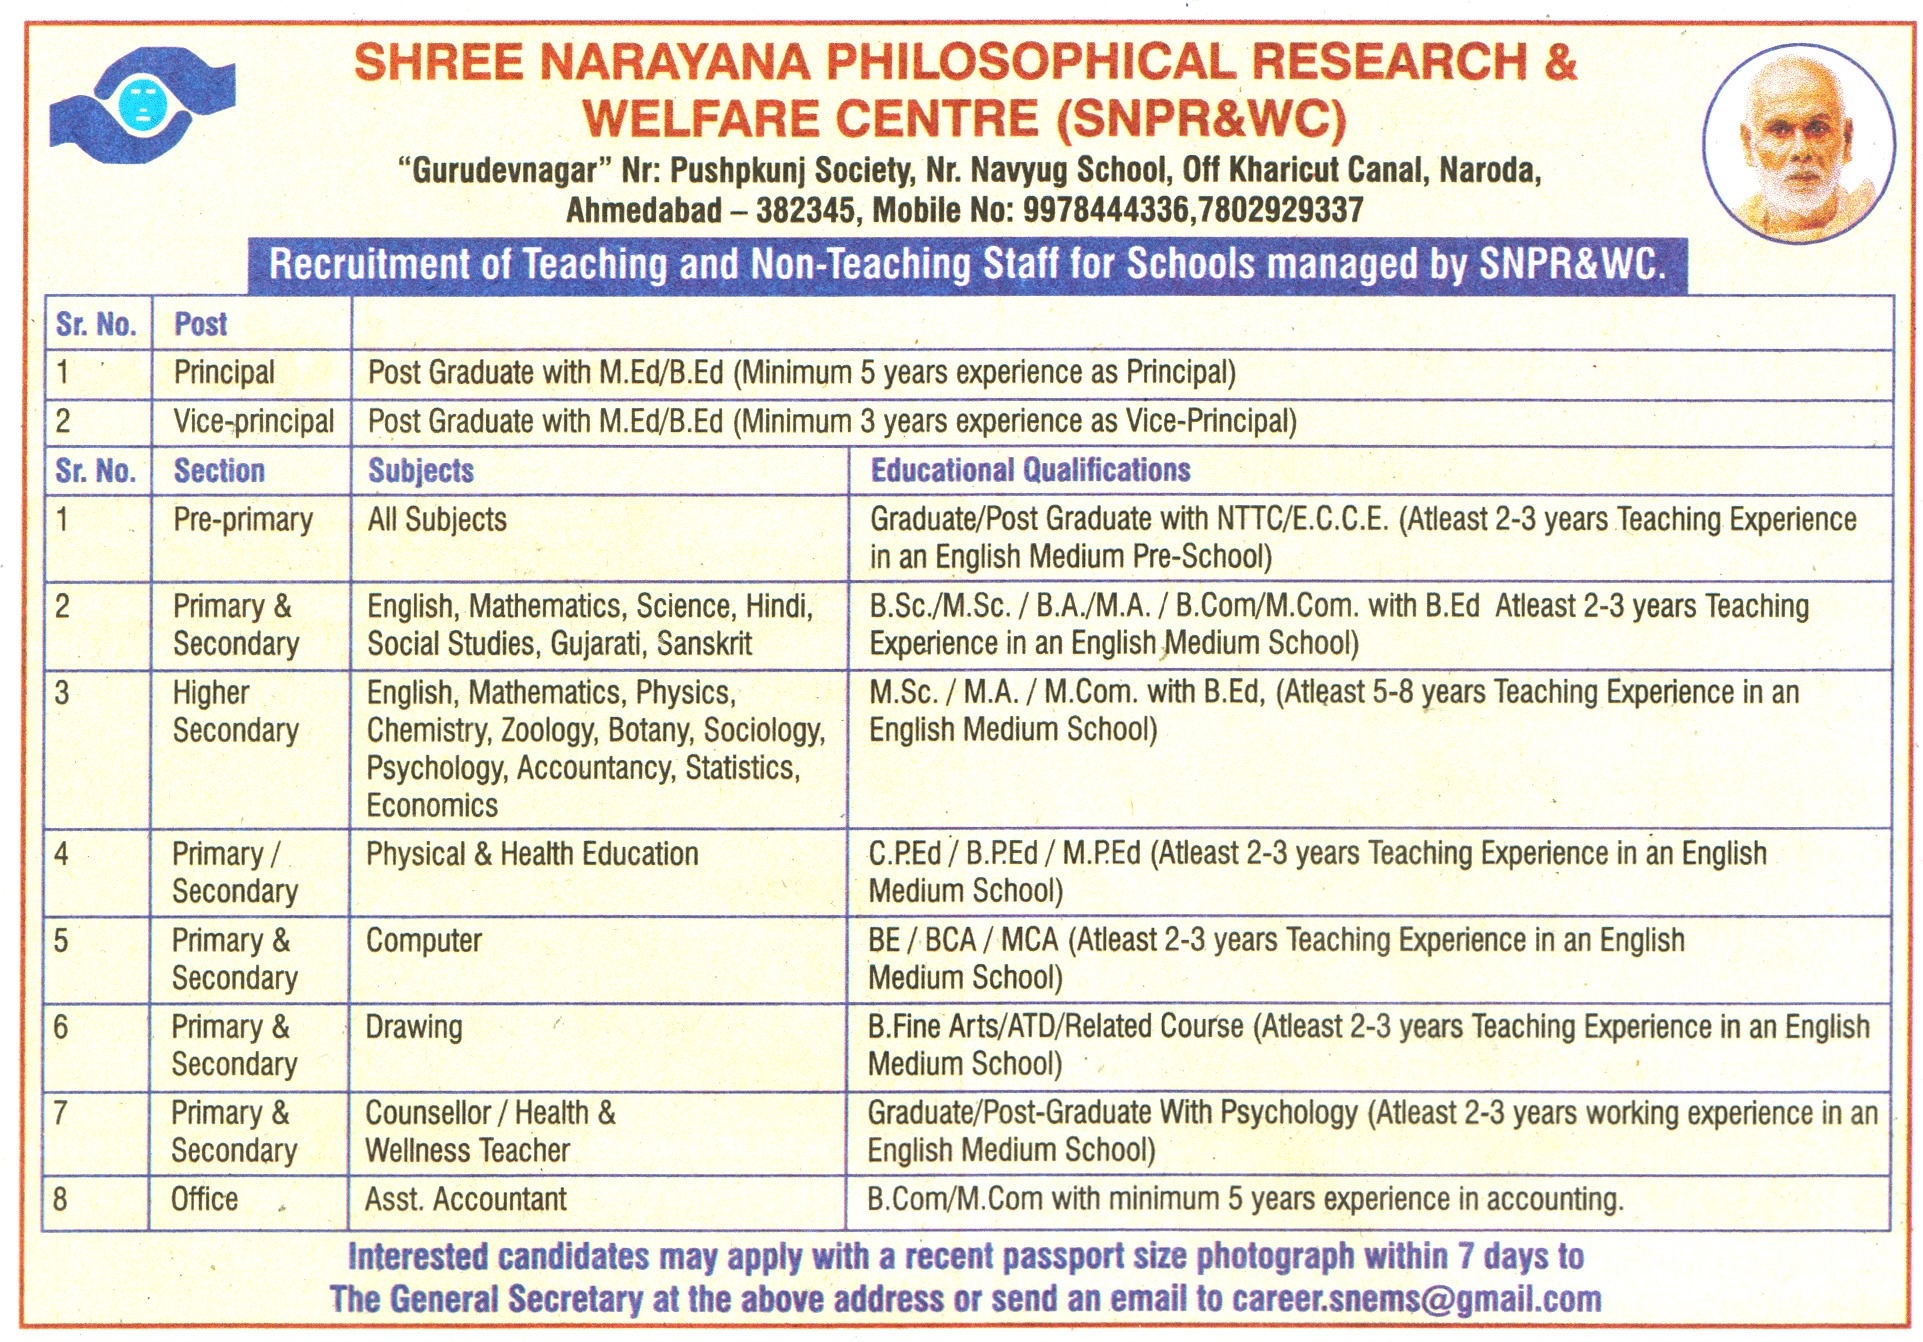 Shree Narayana Philosophical Research & Welfare Centre (SNPR&WC) Ahmedabad Recruitment